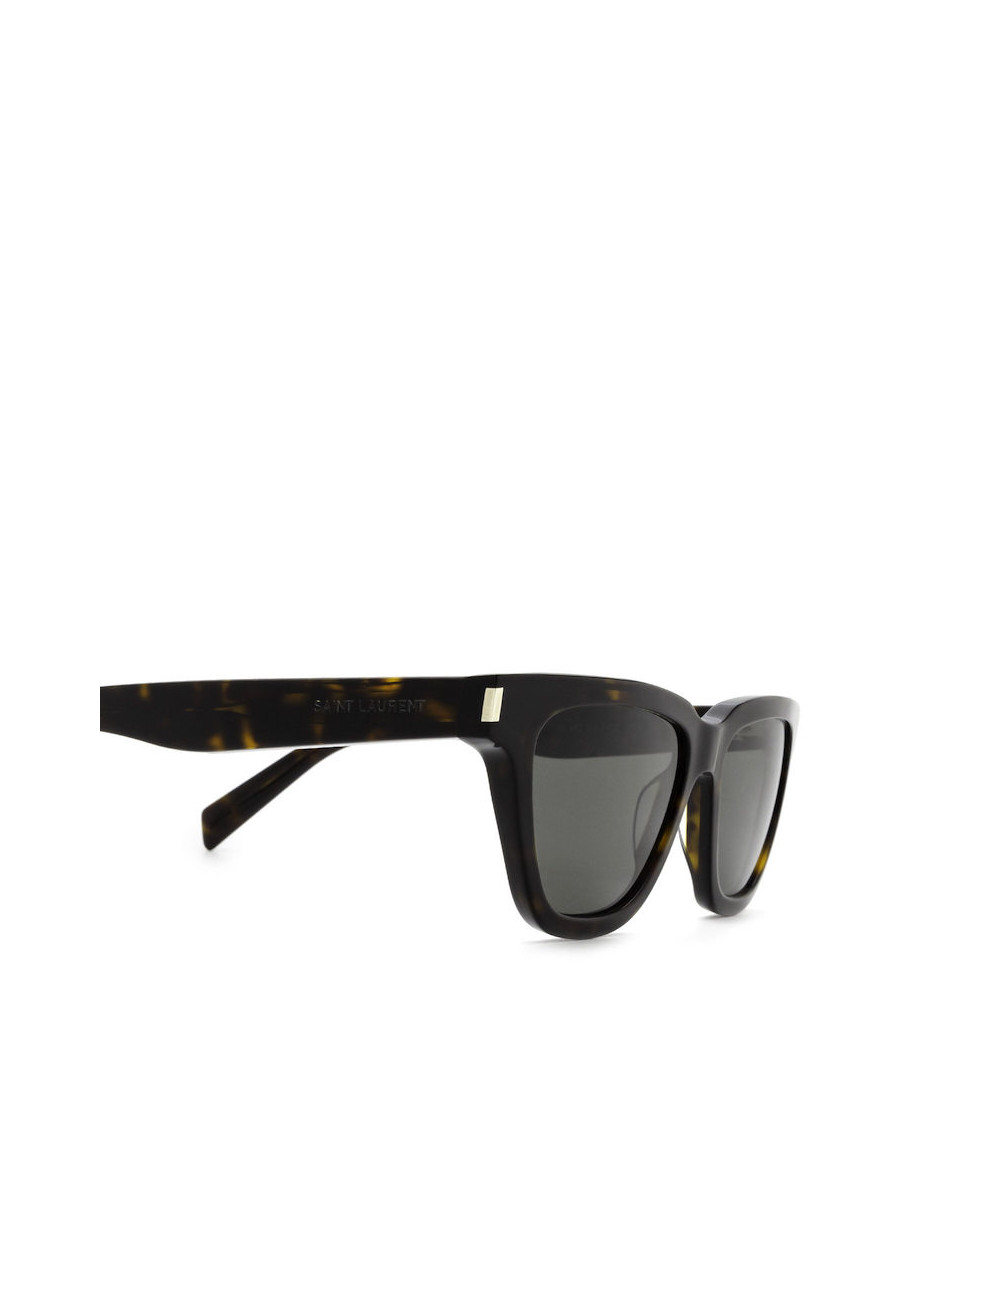 SAINT LAURENT SL 462 Sulpice Sunglasses